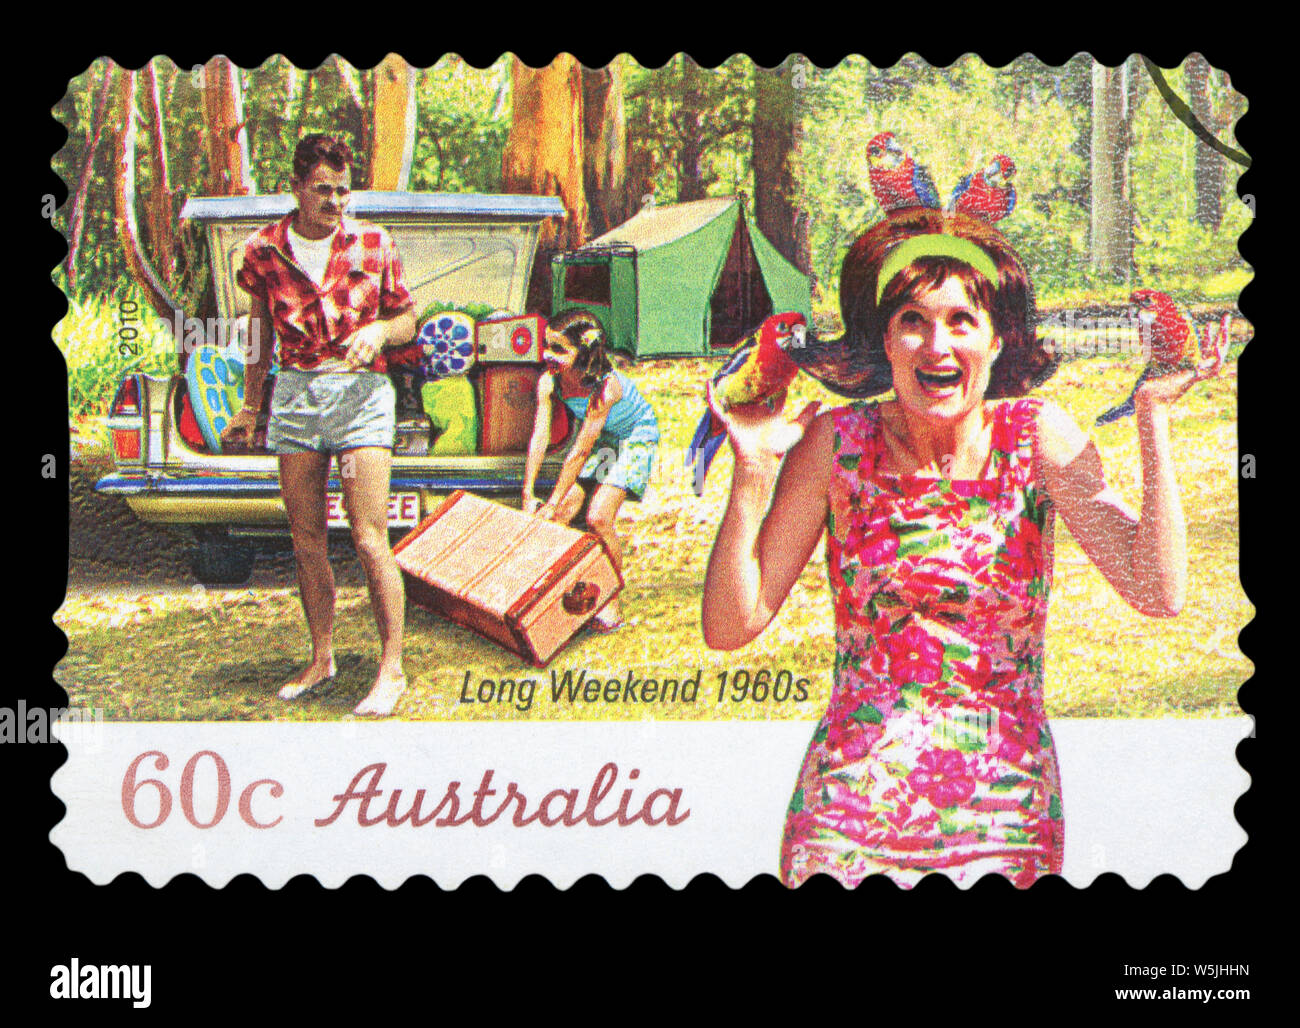 AUSTRALIA - CIRCA 2010: A stamp printed in Australia shows long weekend 1960s, circa 2010 Stock Photo